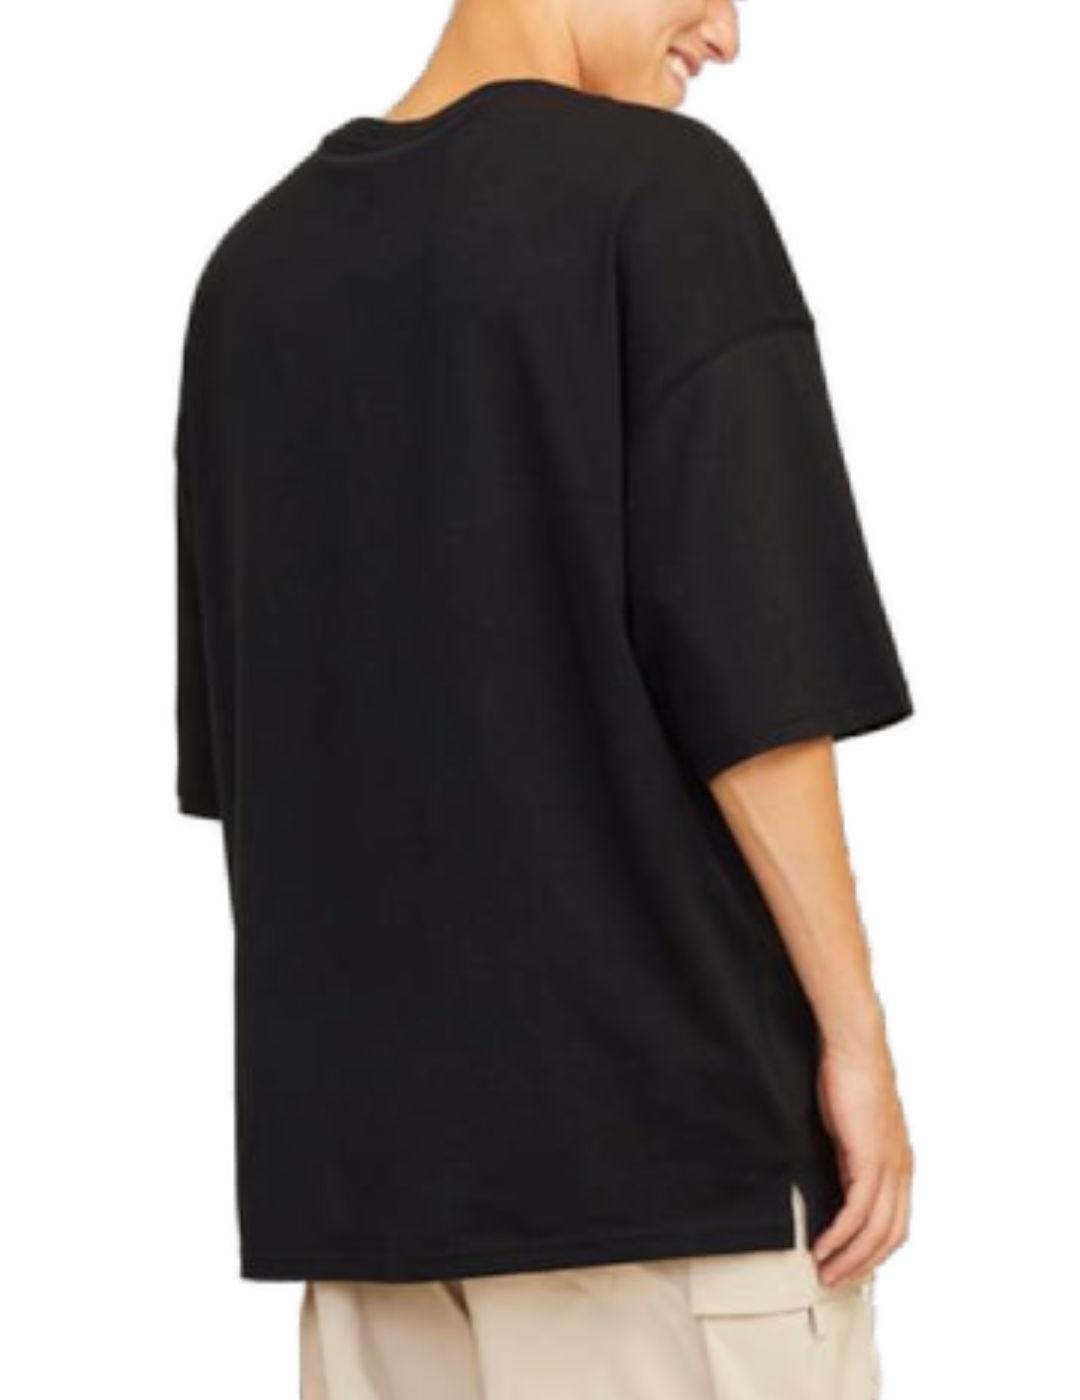 Camiseta básica Jack&Jones Charge negro oversize para hombre